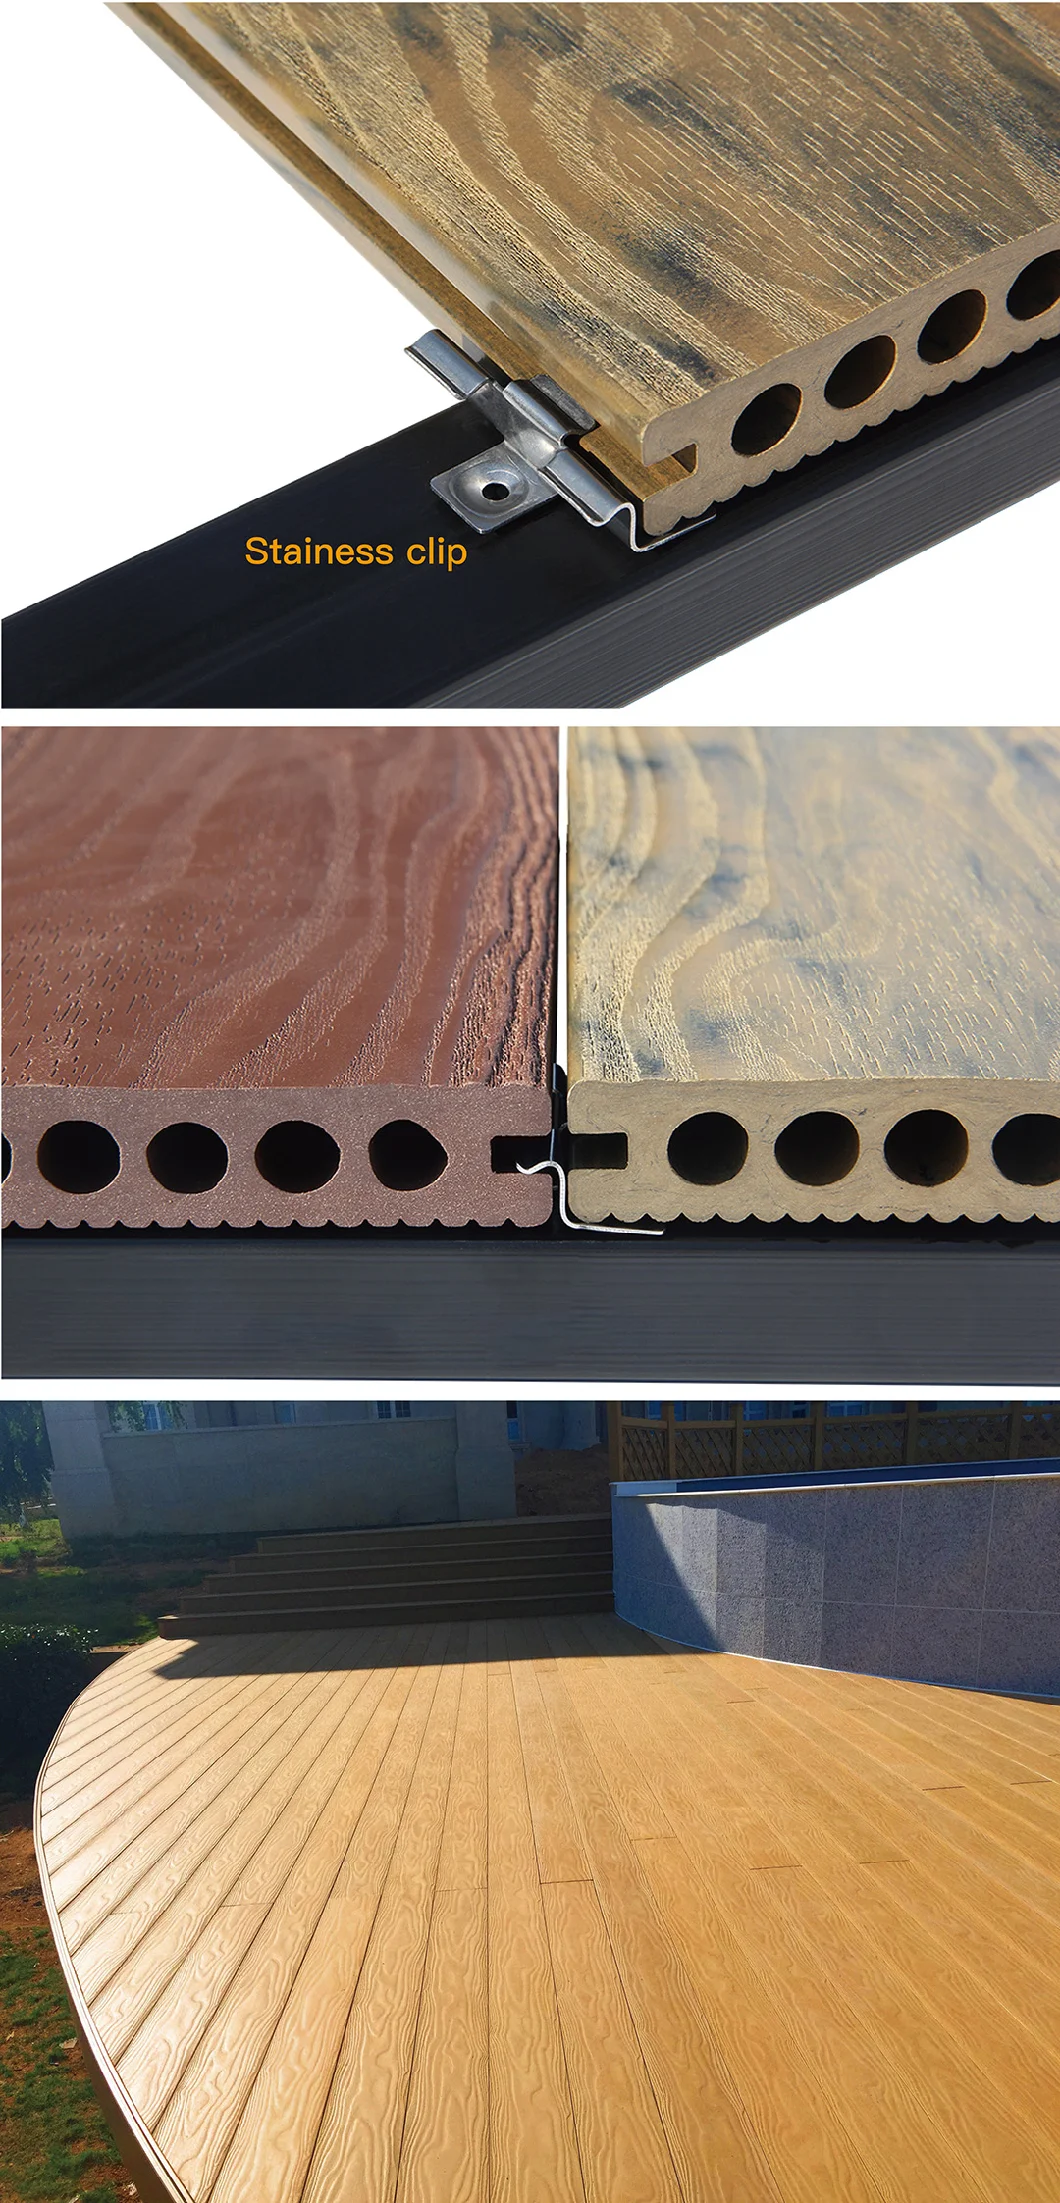 High-Friction Wood Grain Low Moisture Absorption Heat Resistant Composite Decking